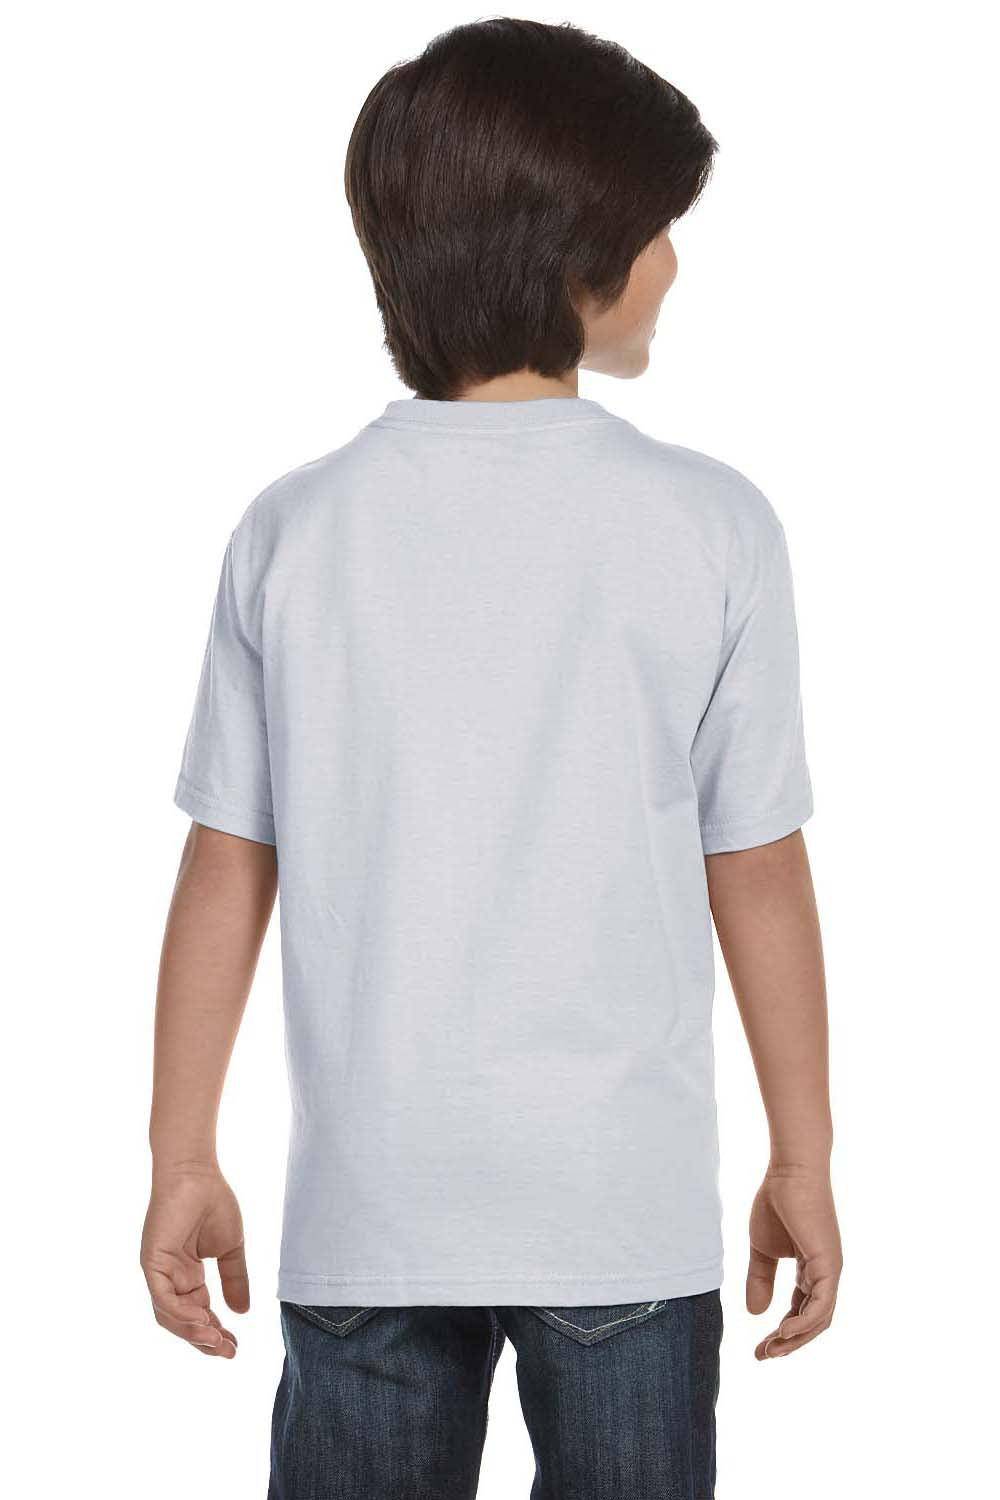 Hanes 5480 Youth ComfortSoft Short Sleeve Crewneck T-Shirt Ash Grey Back